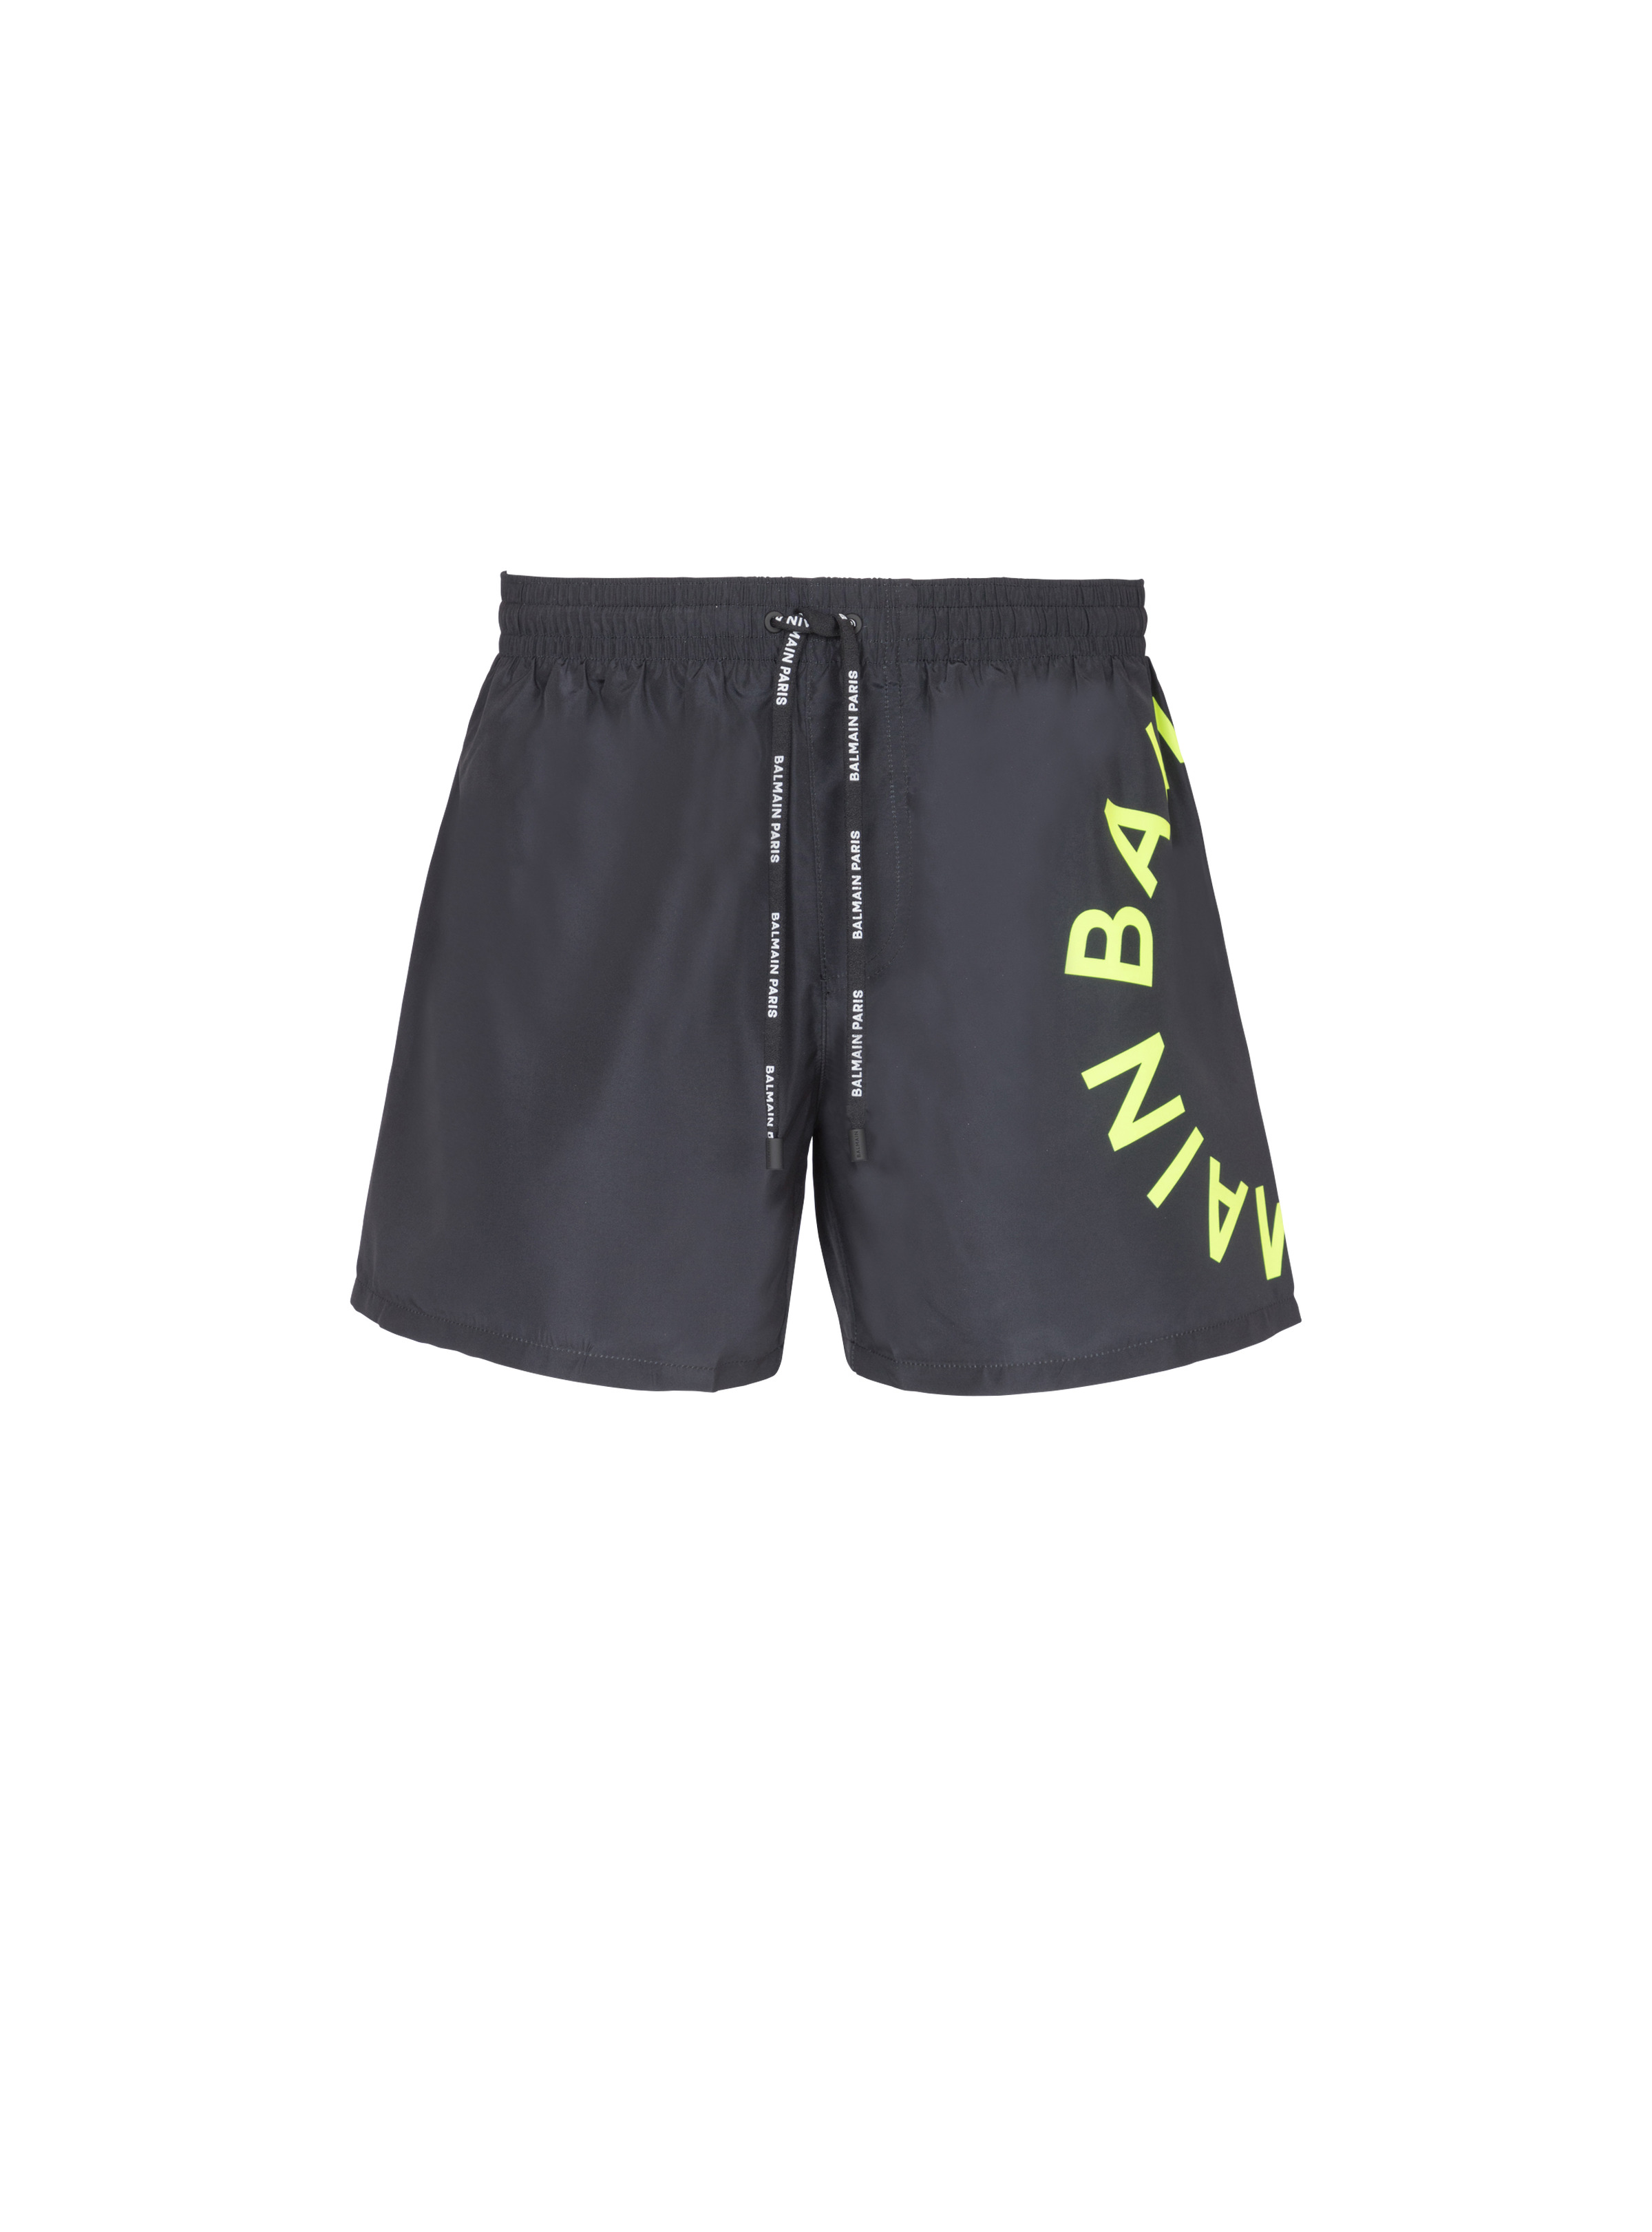 Balmain swim shorts - 1